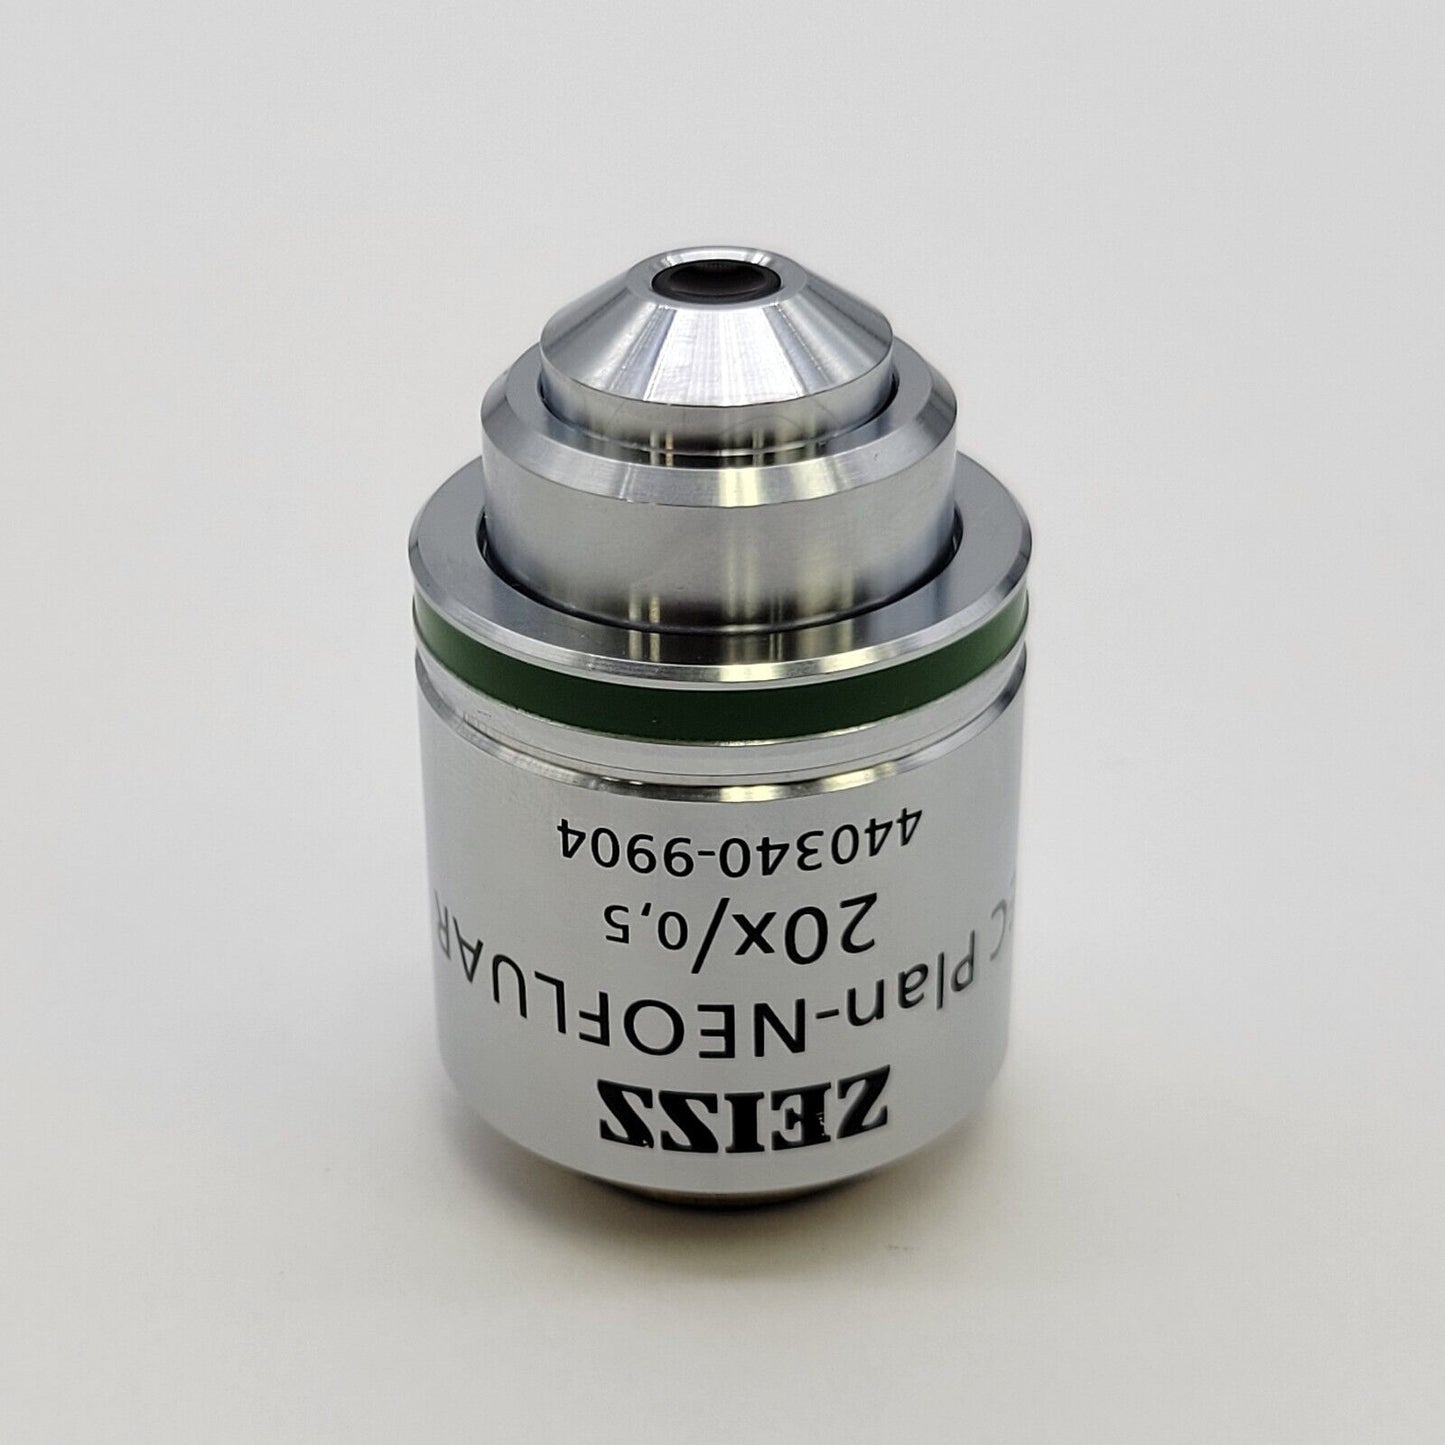 Zeiss Microscope Objective EC Plan Neofluar 20x ∞/0.17 440340-9904